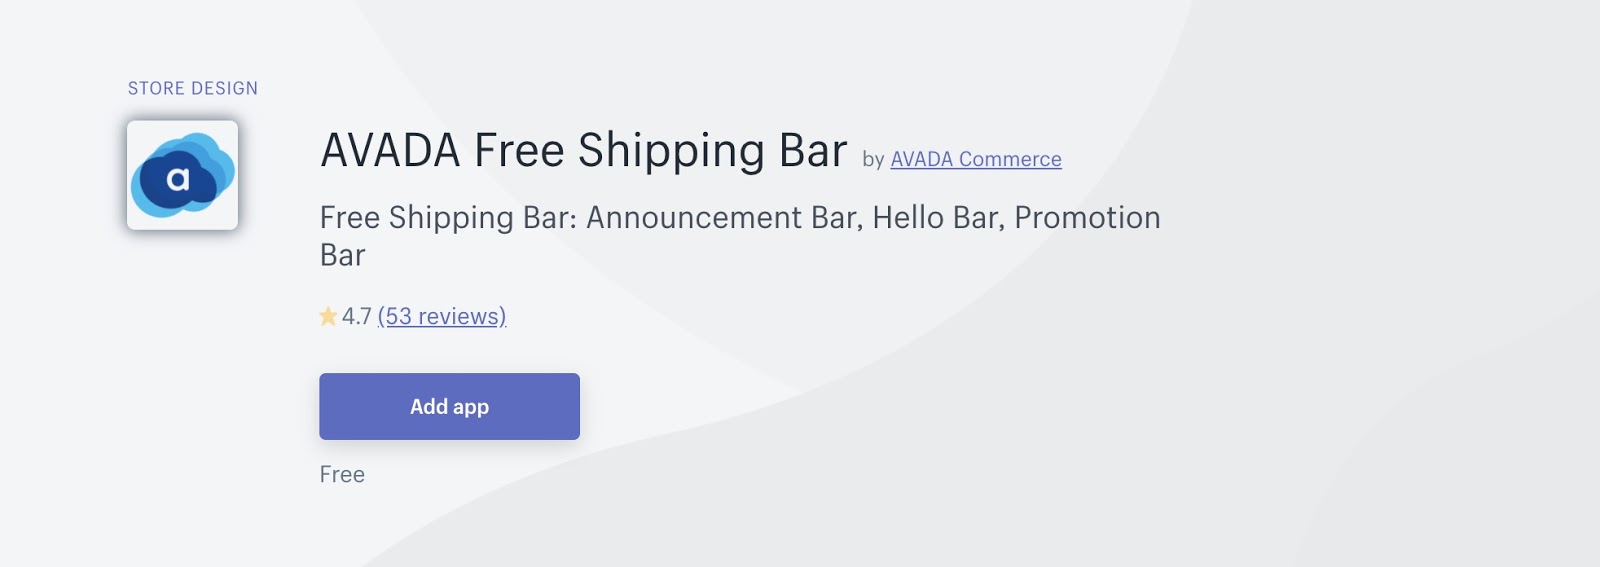 AVADA Free Shipping Bar